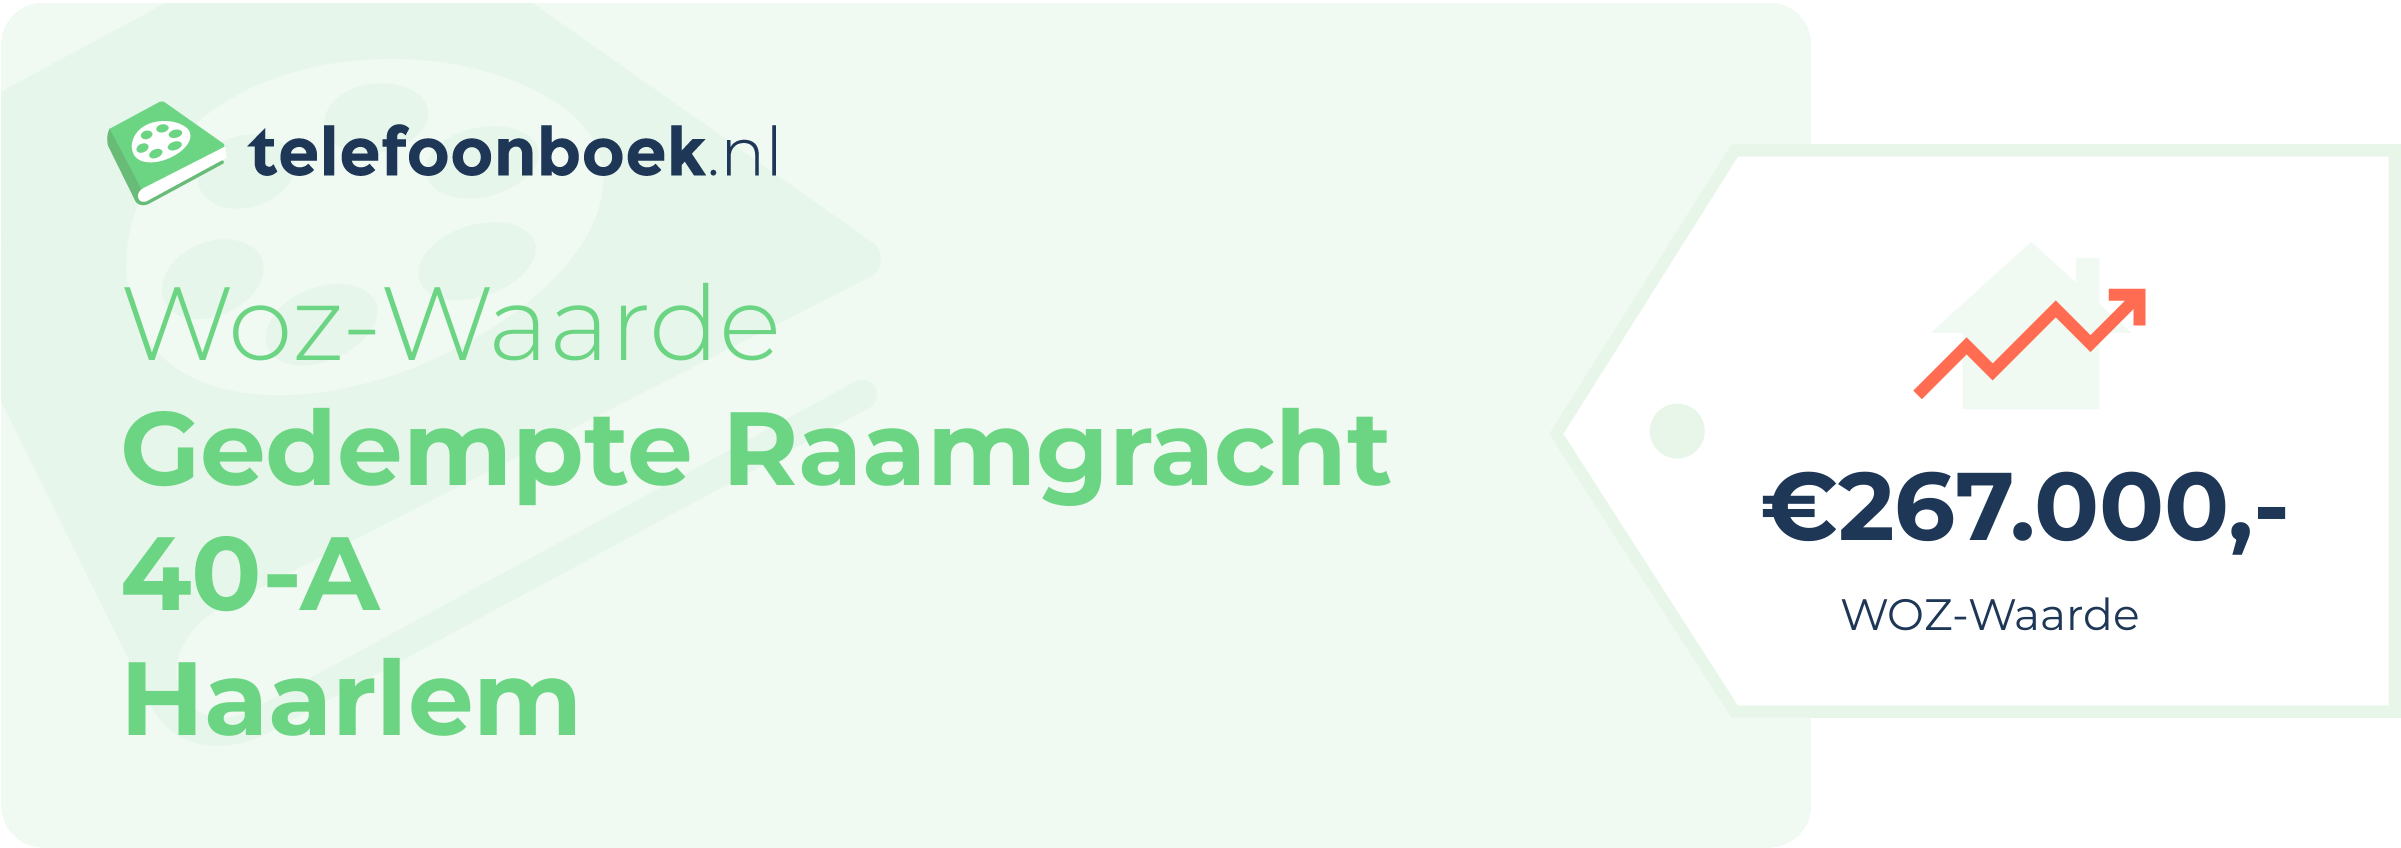 WOZ-waarde Gedempte Raamgracht 40-A Haarlem